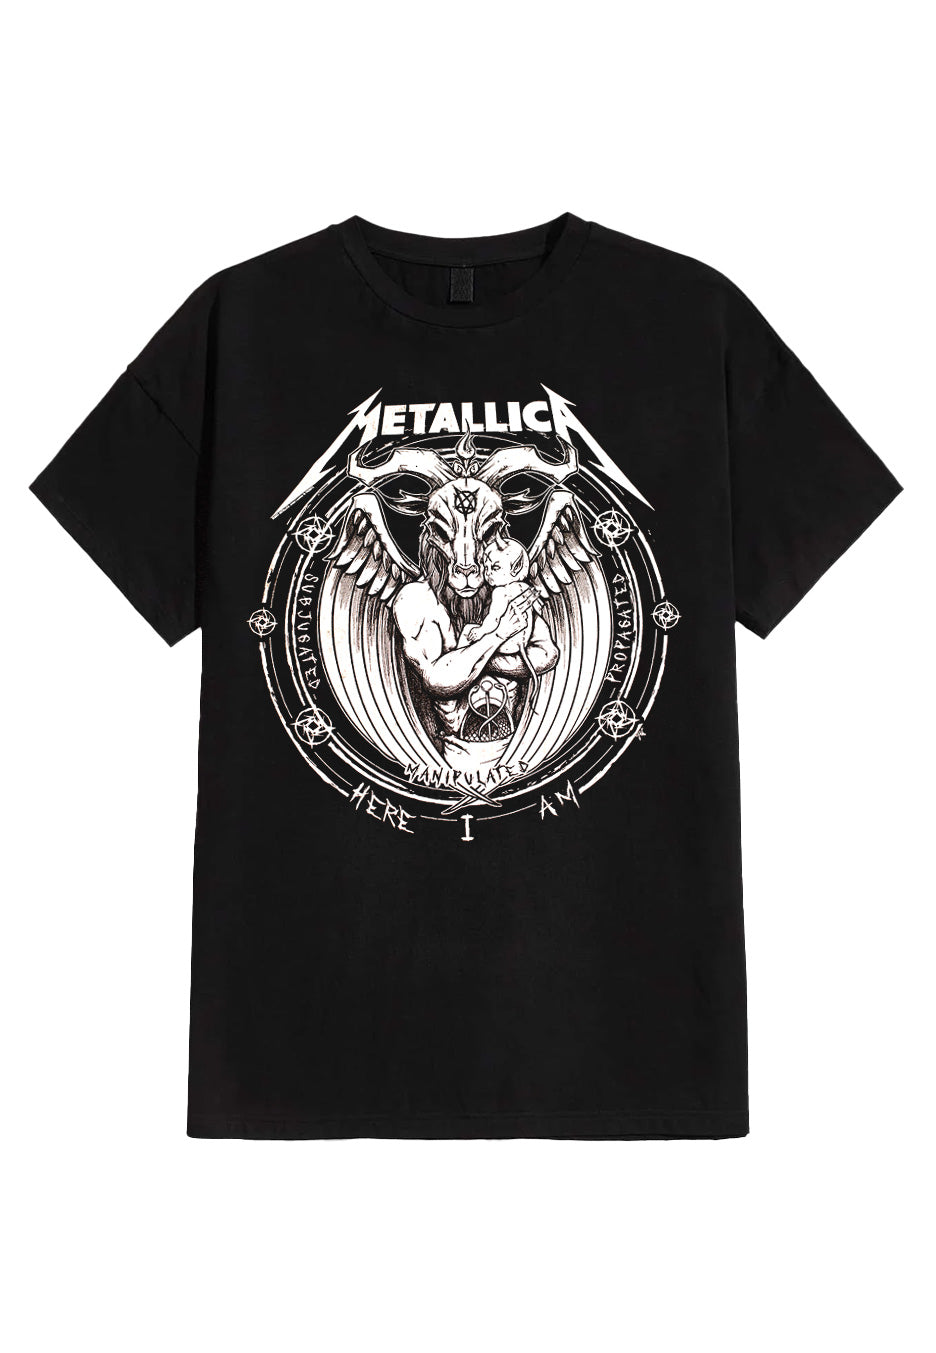 Metallica - Darkness Son - T-Shirt